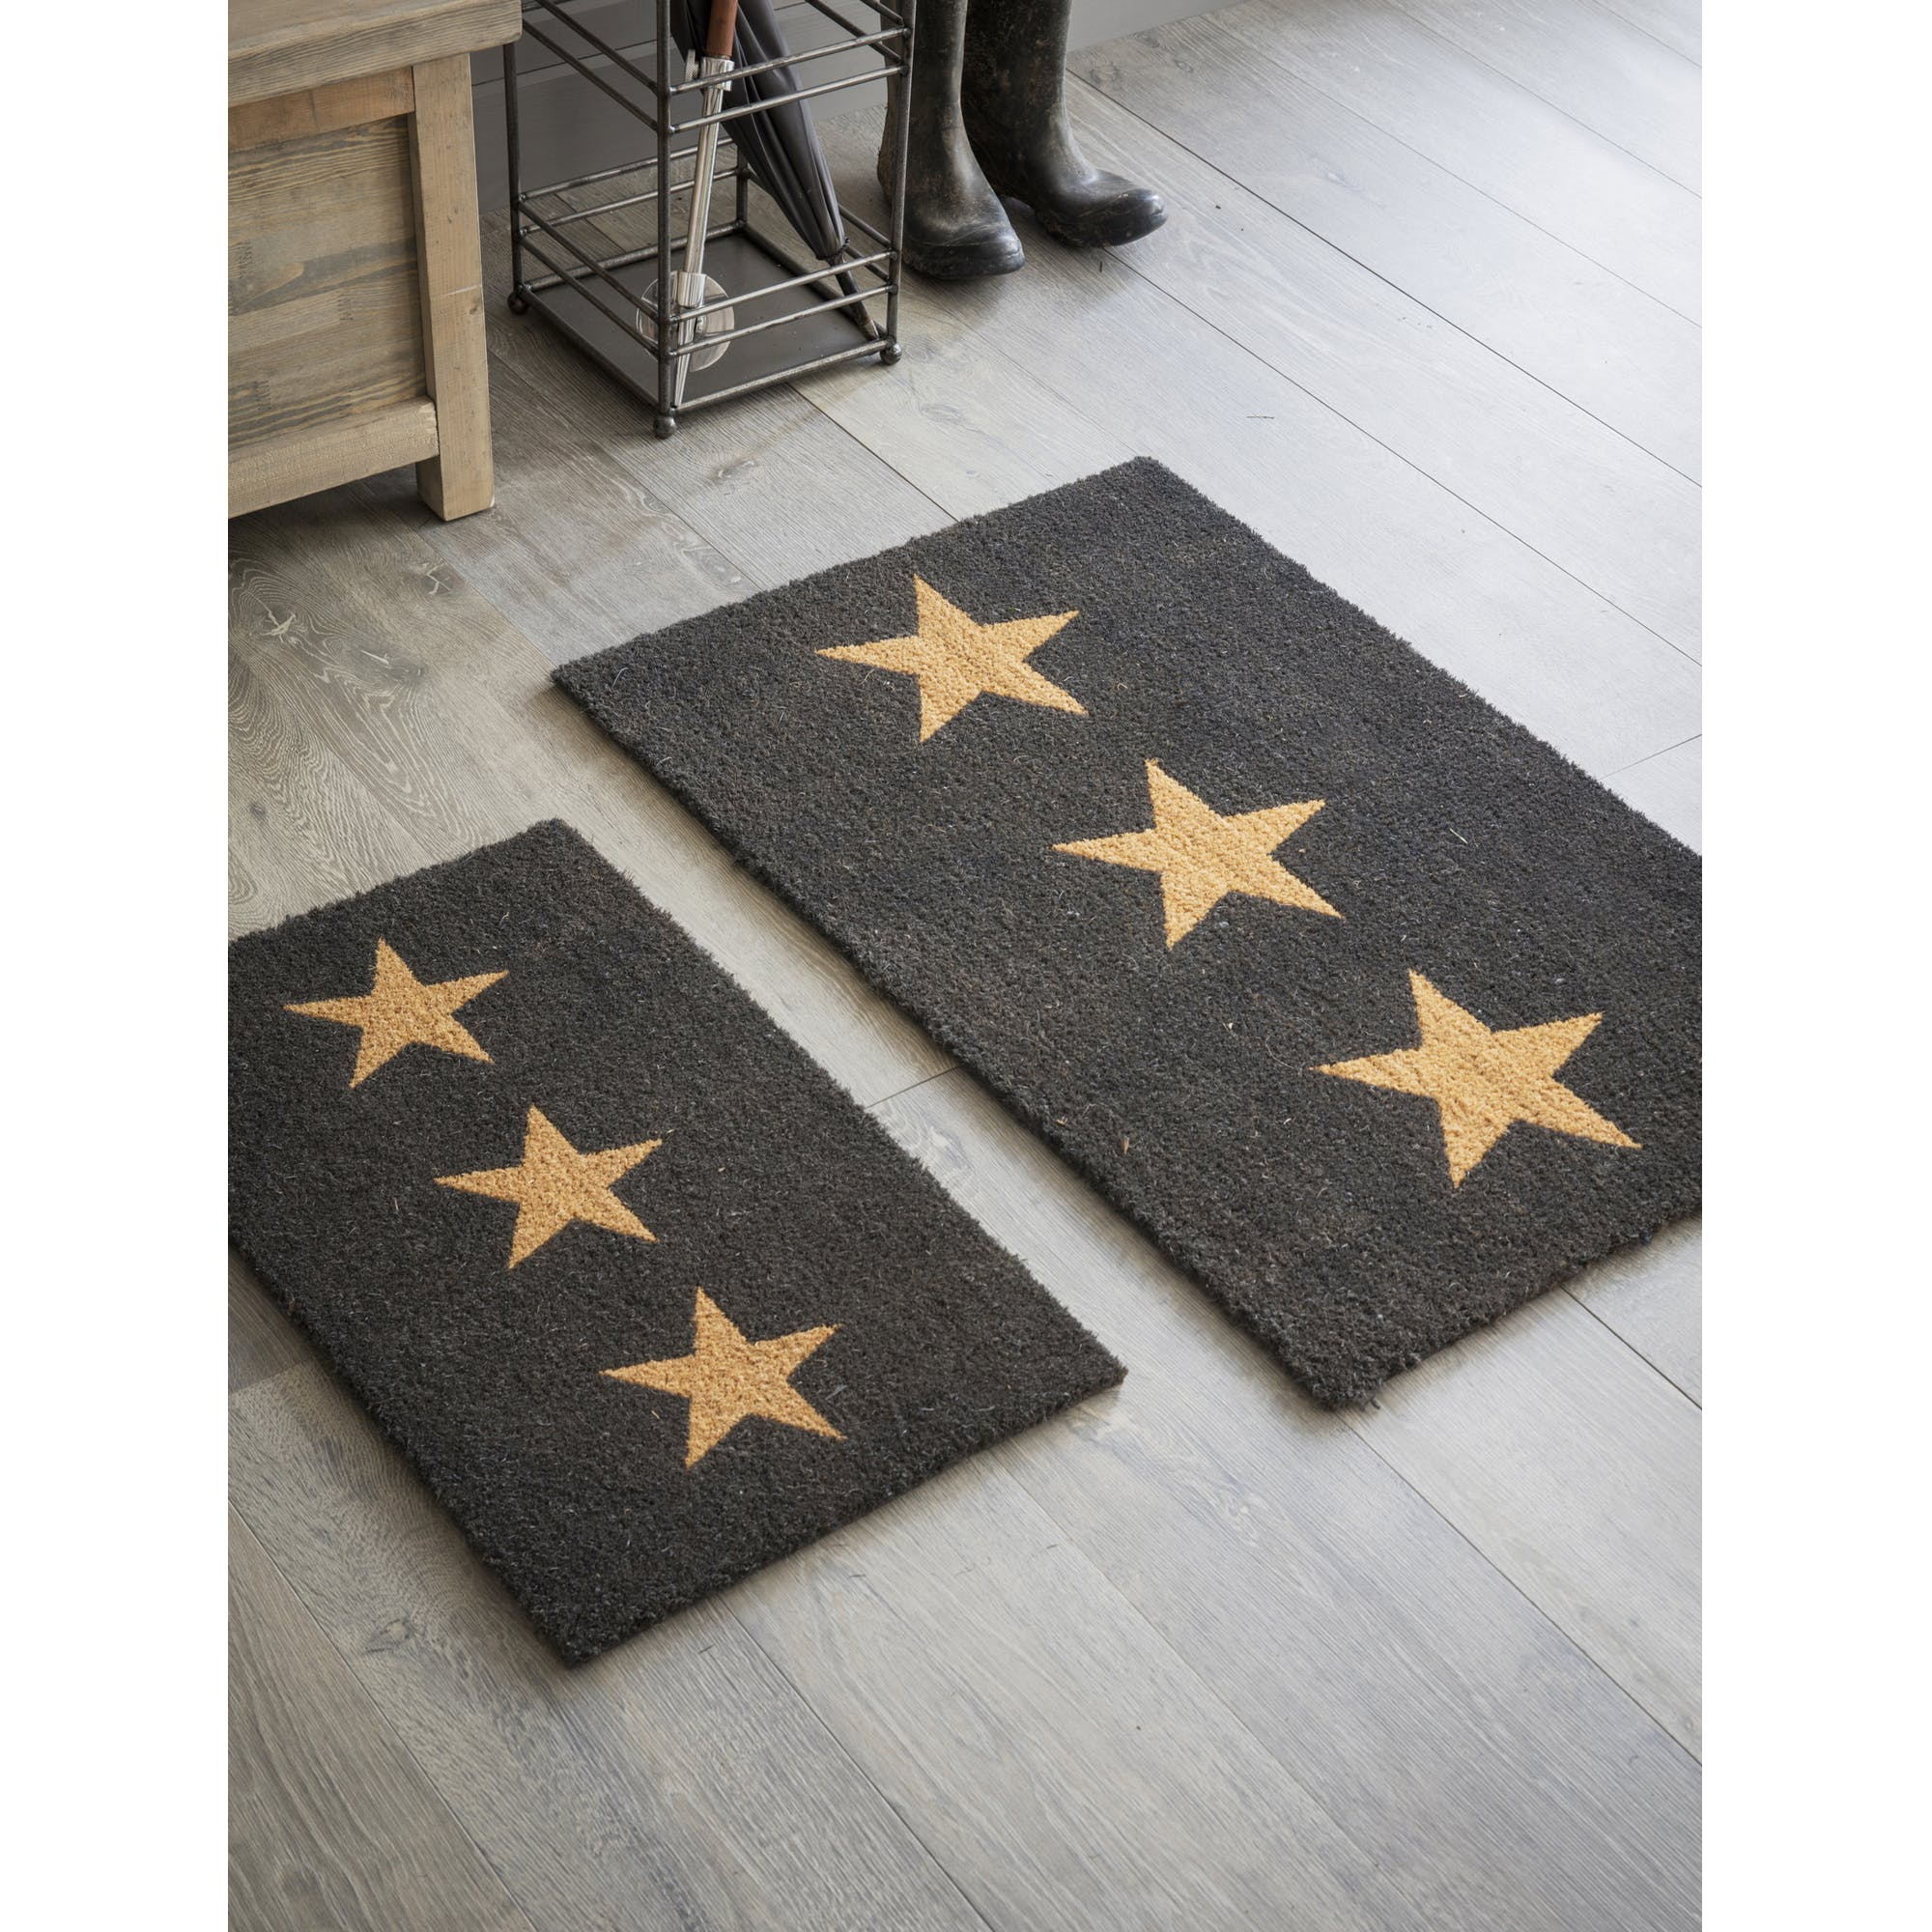 Three Star Doormat